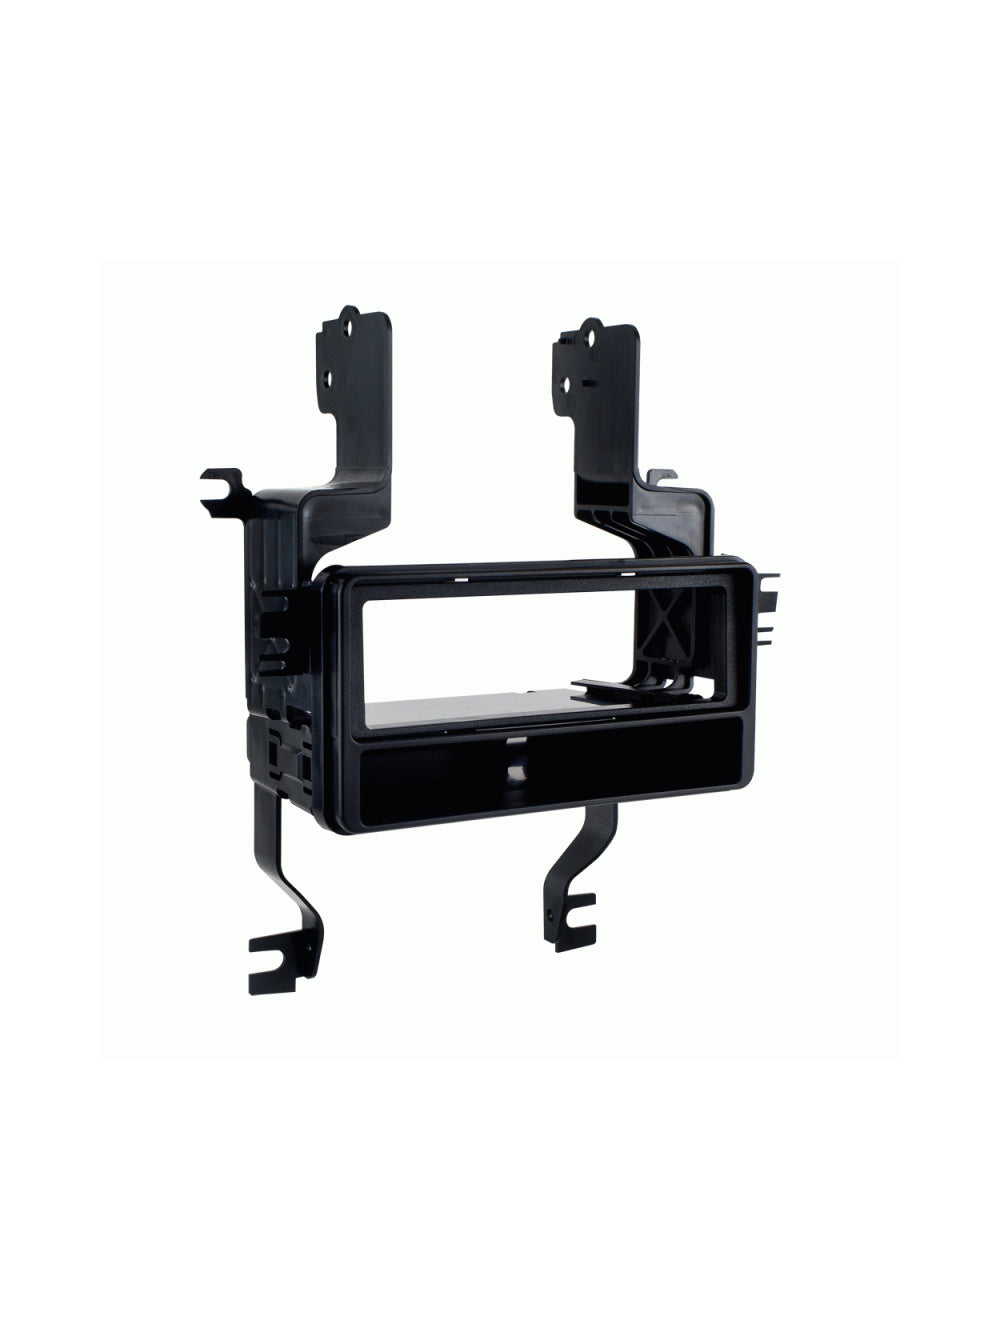 Metra 99-8241 SIngle DIN Install Dash Kit for Select 2013-Up Toyota Highlander Black